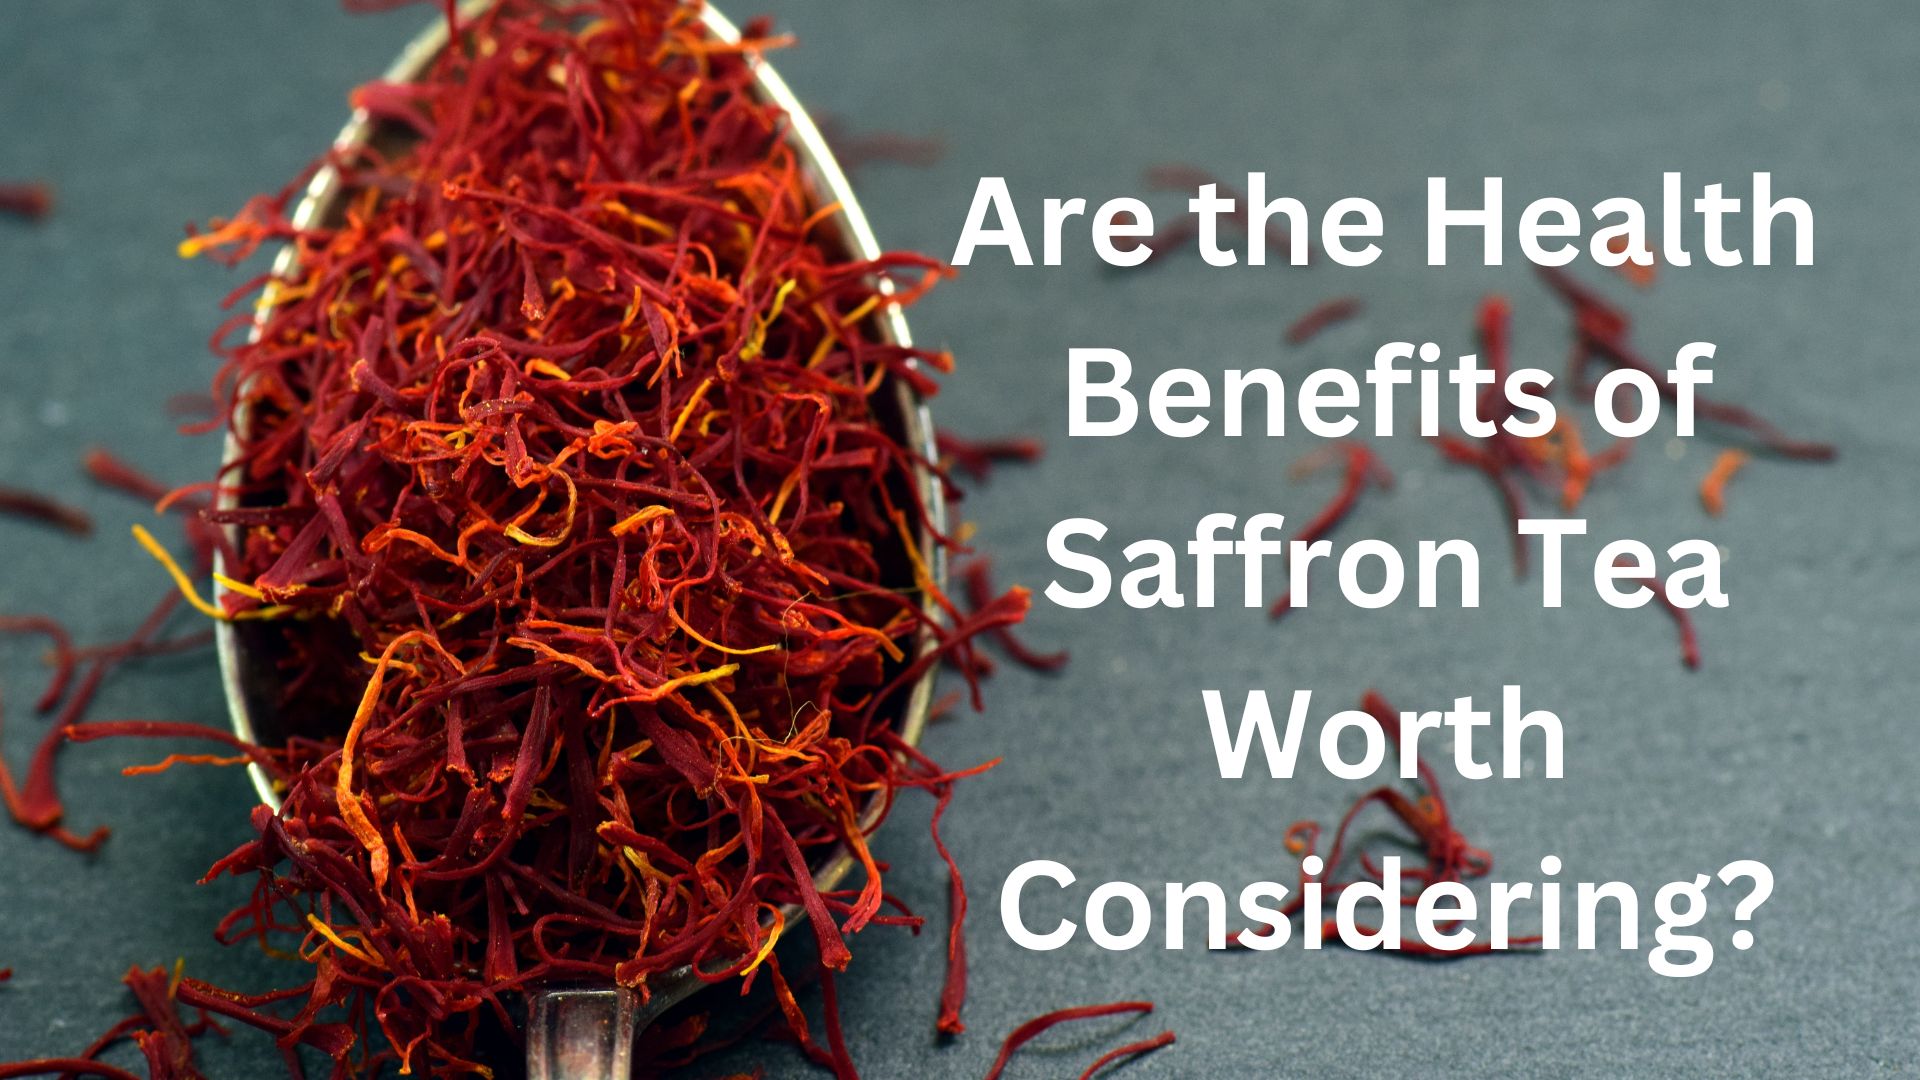 Are the Health Benefits of Saffron Tea Worth Considering?